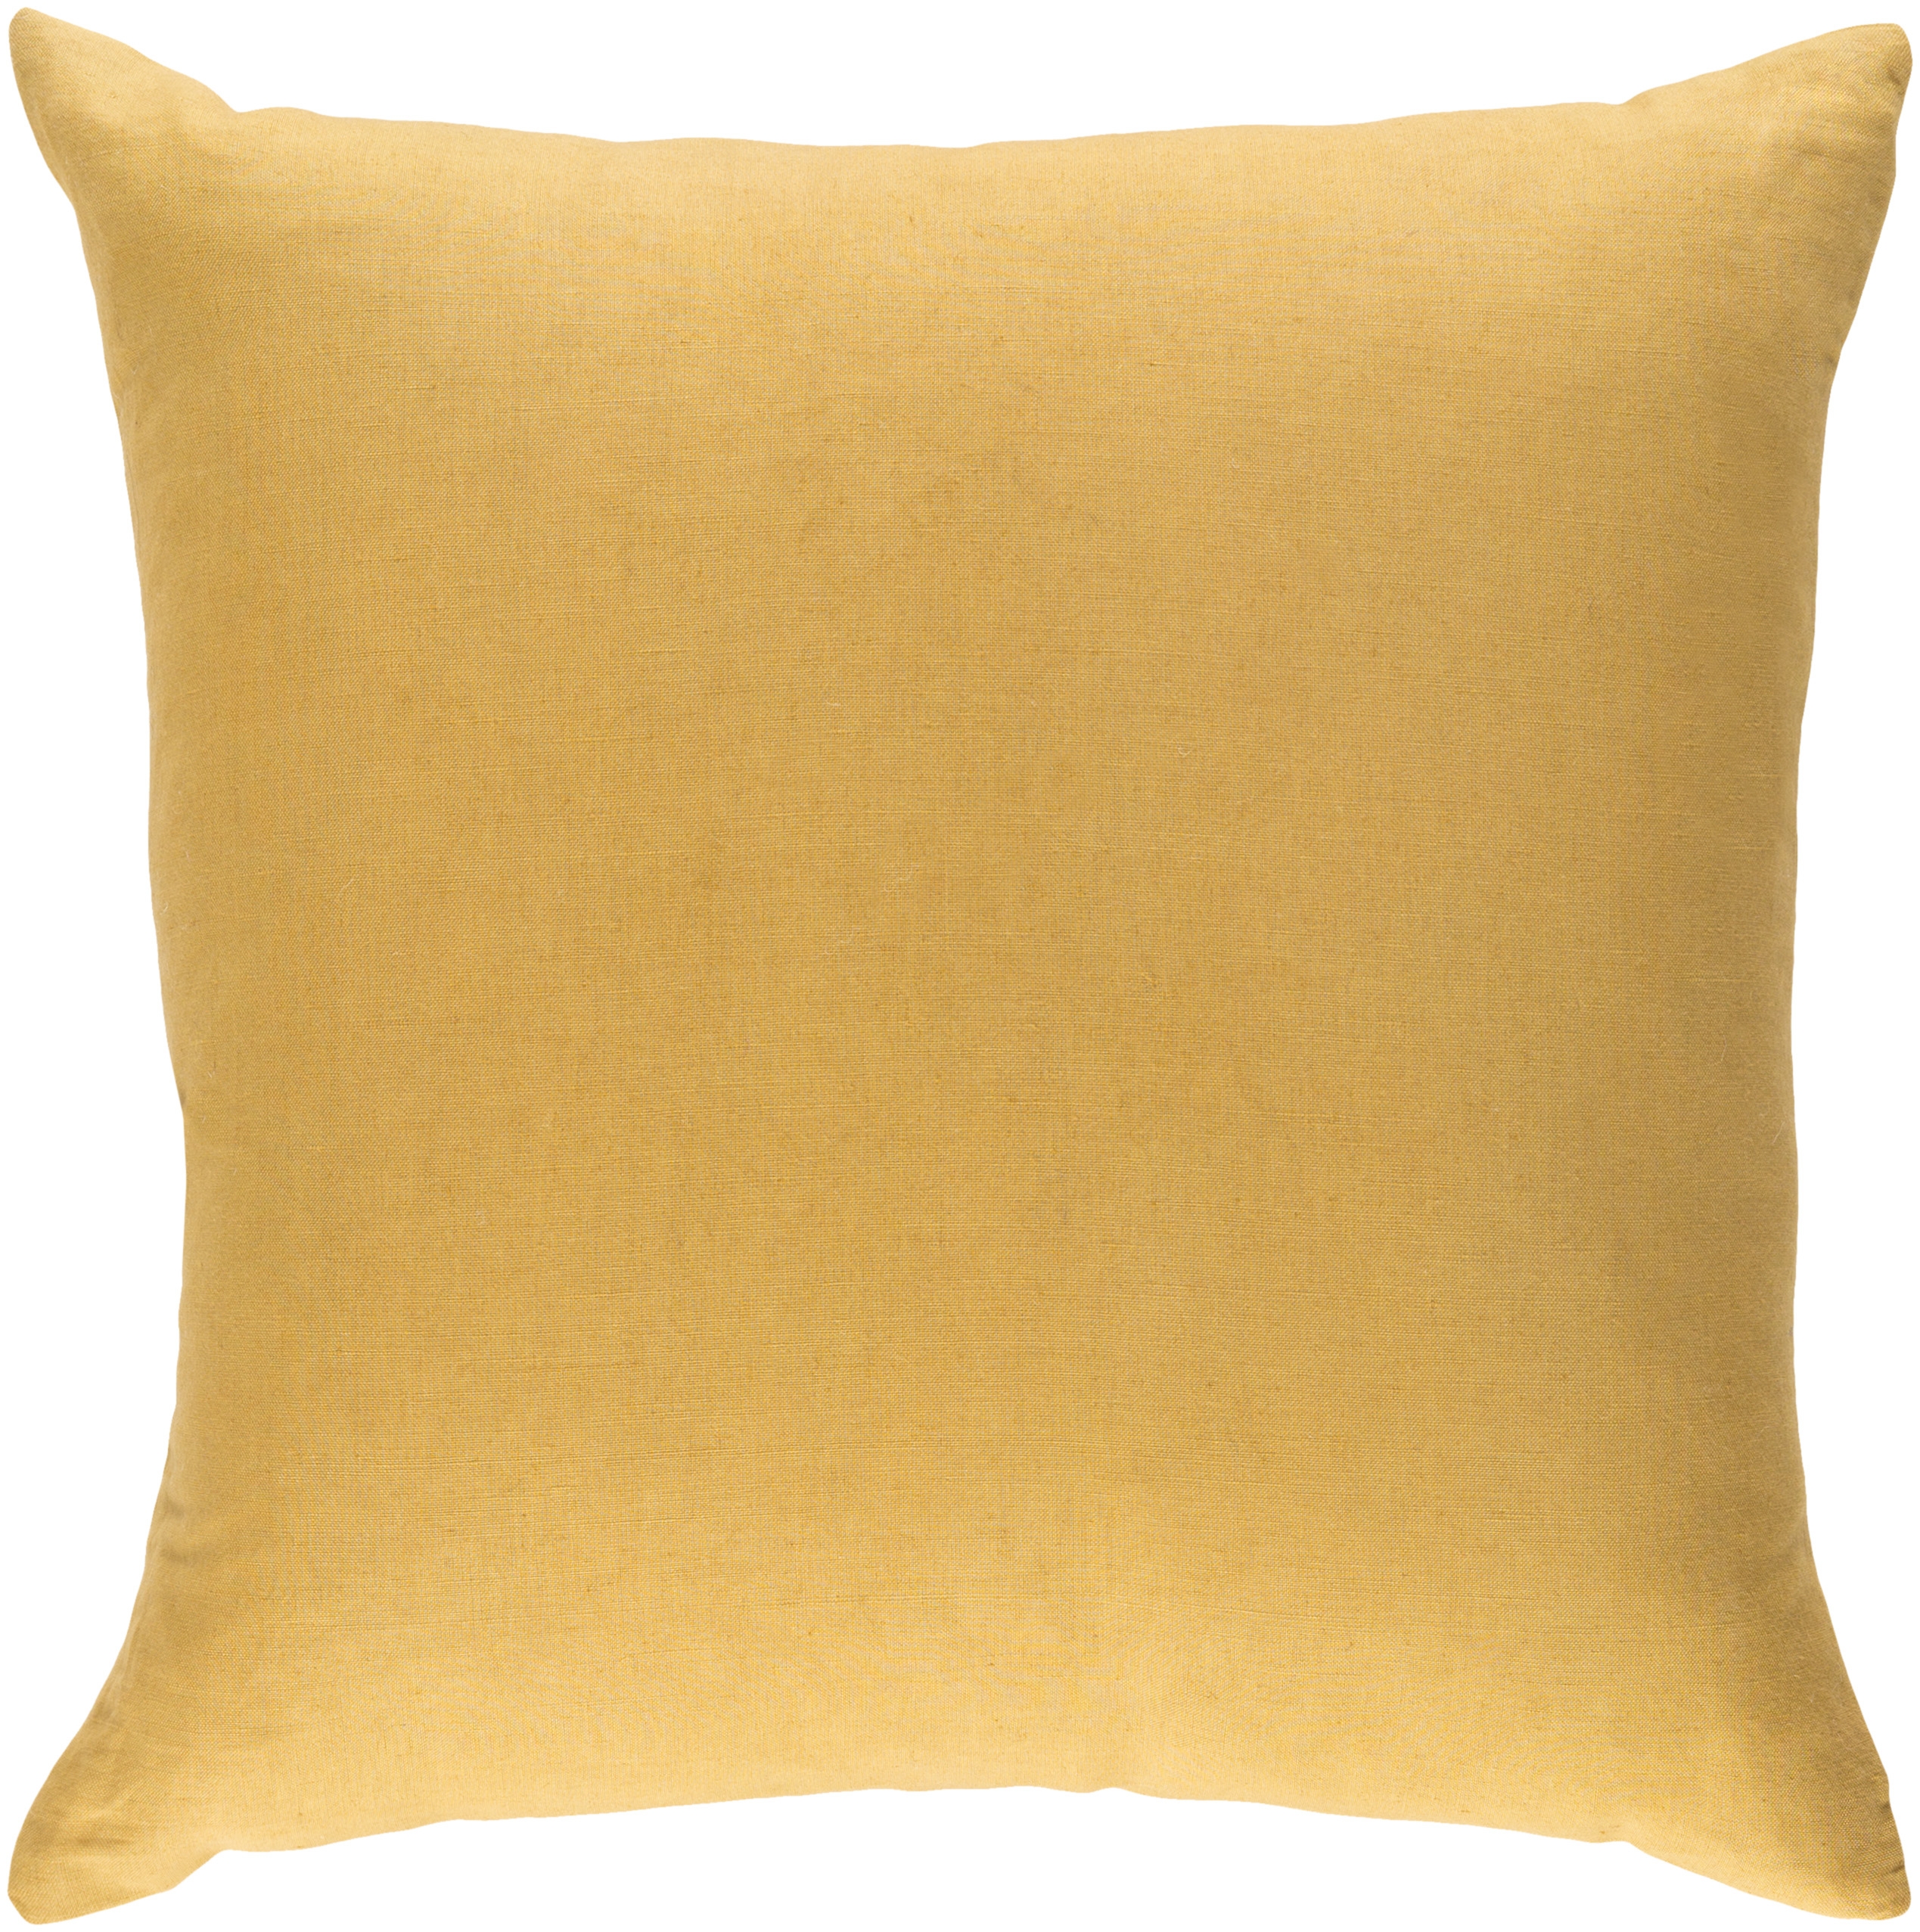 Ethiopia Throw Pillow, 18" x 18", pillow cover only - Image 0